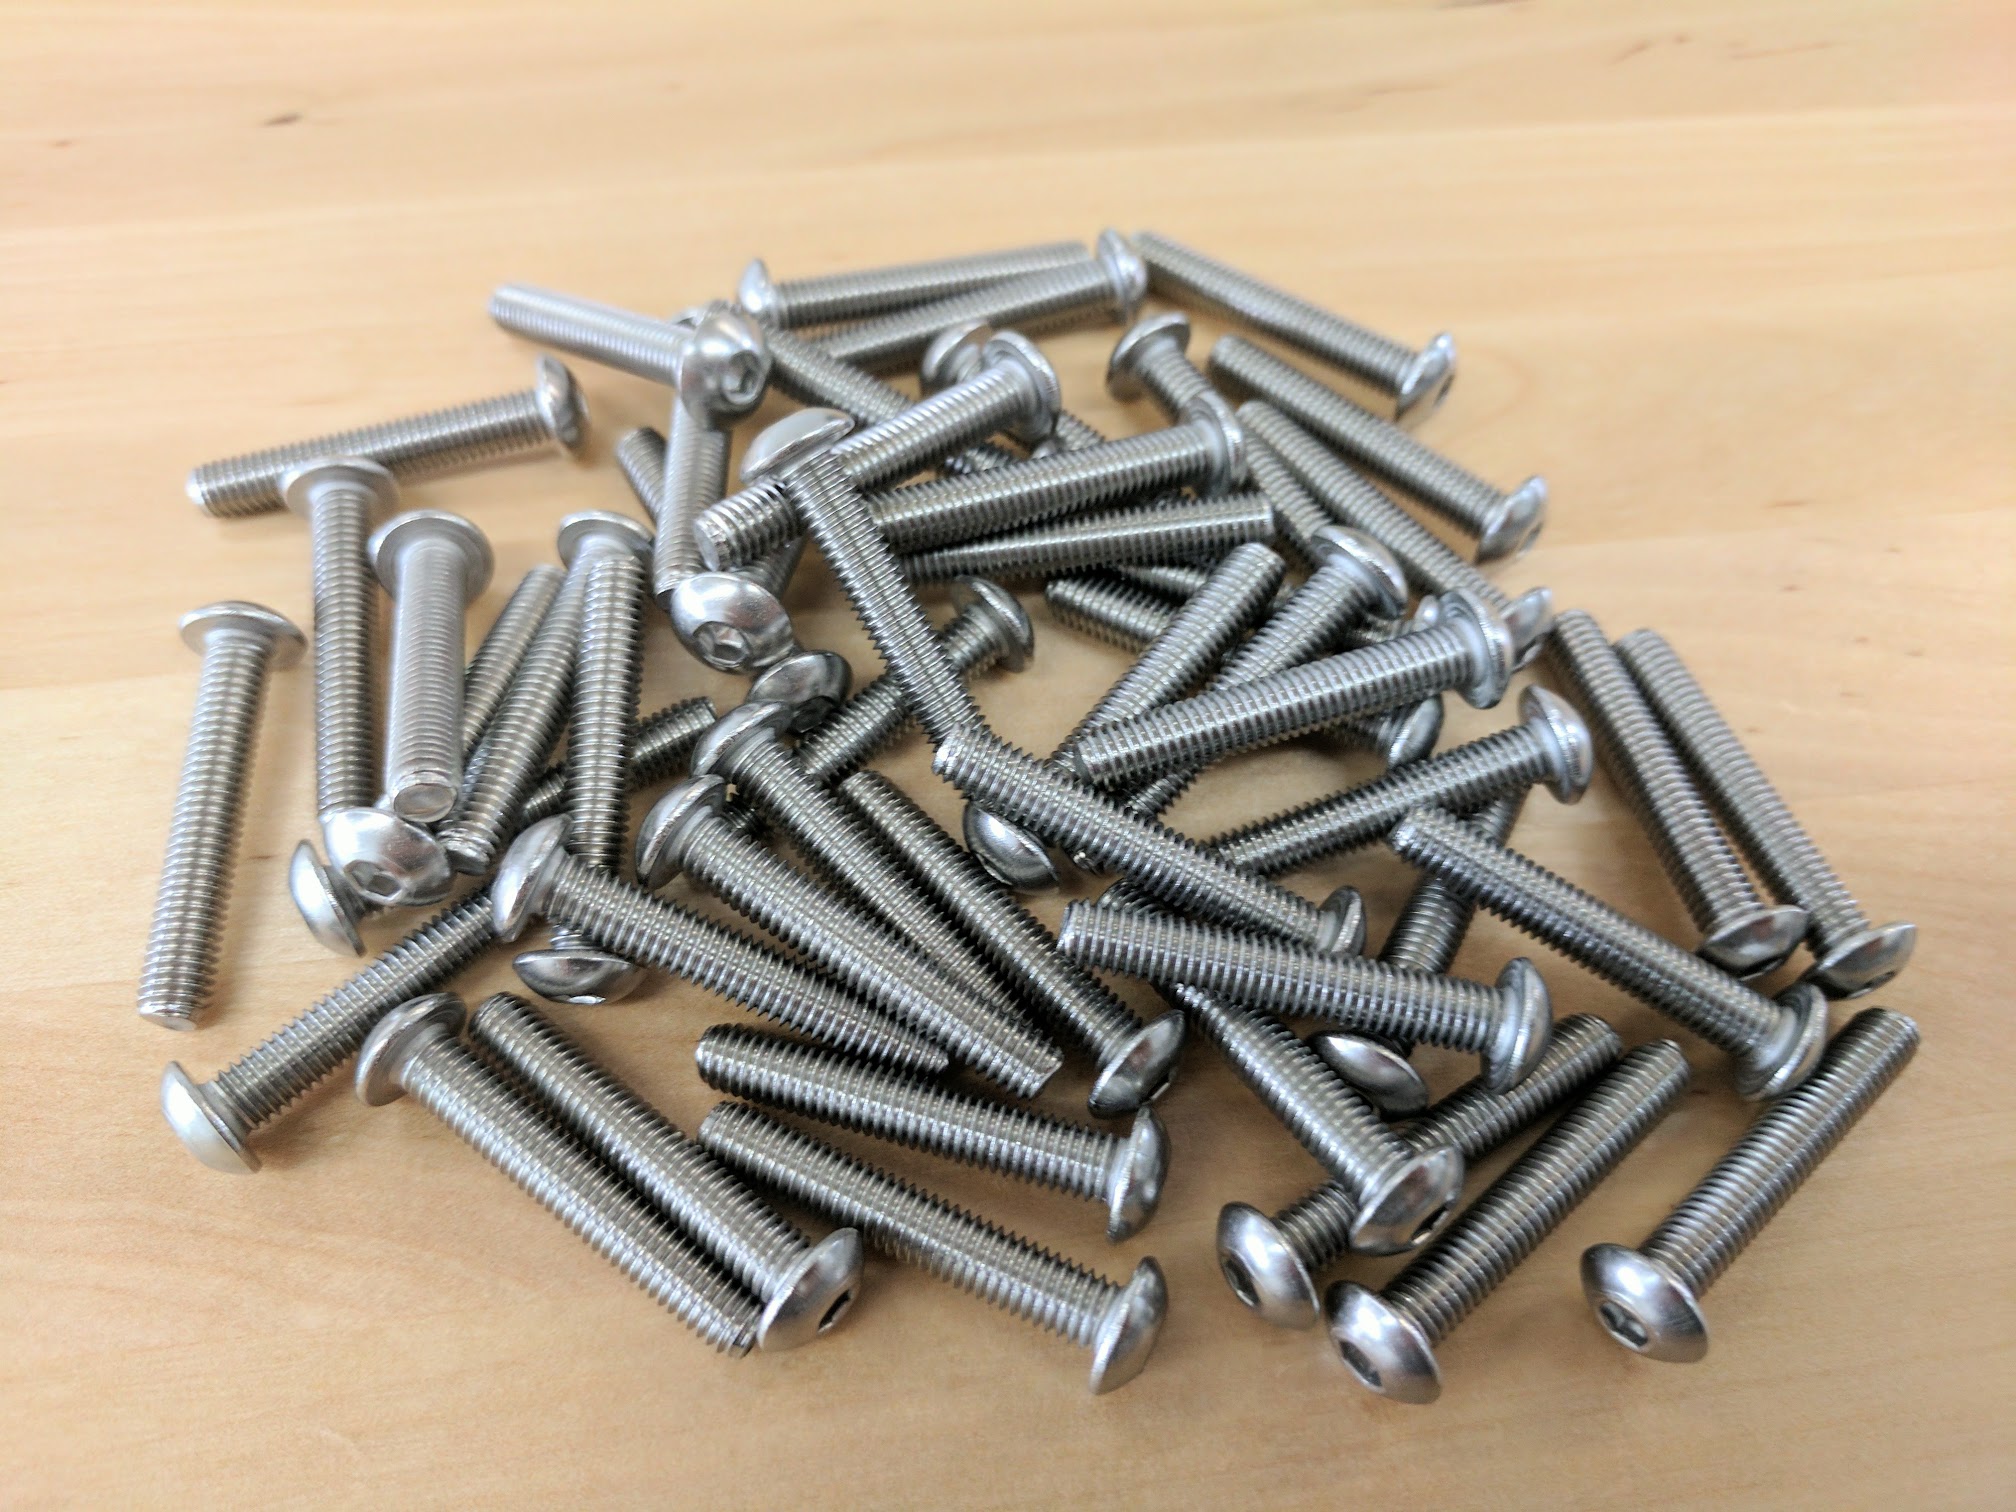 M5x30 screws